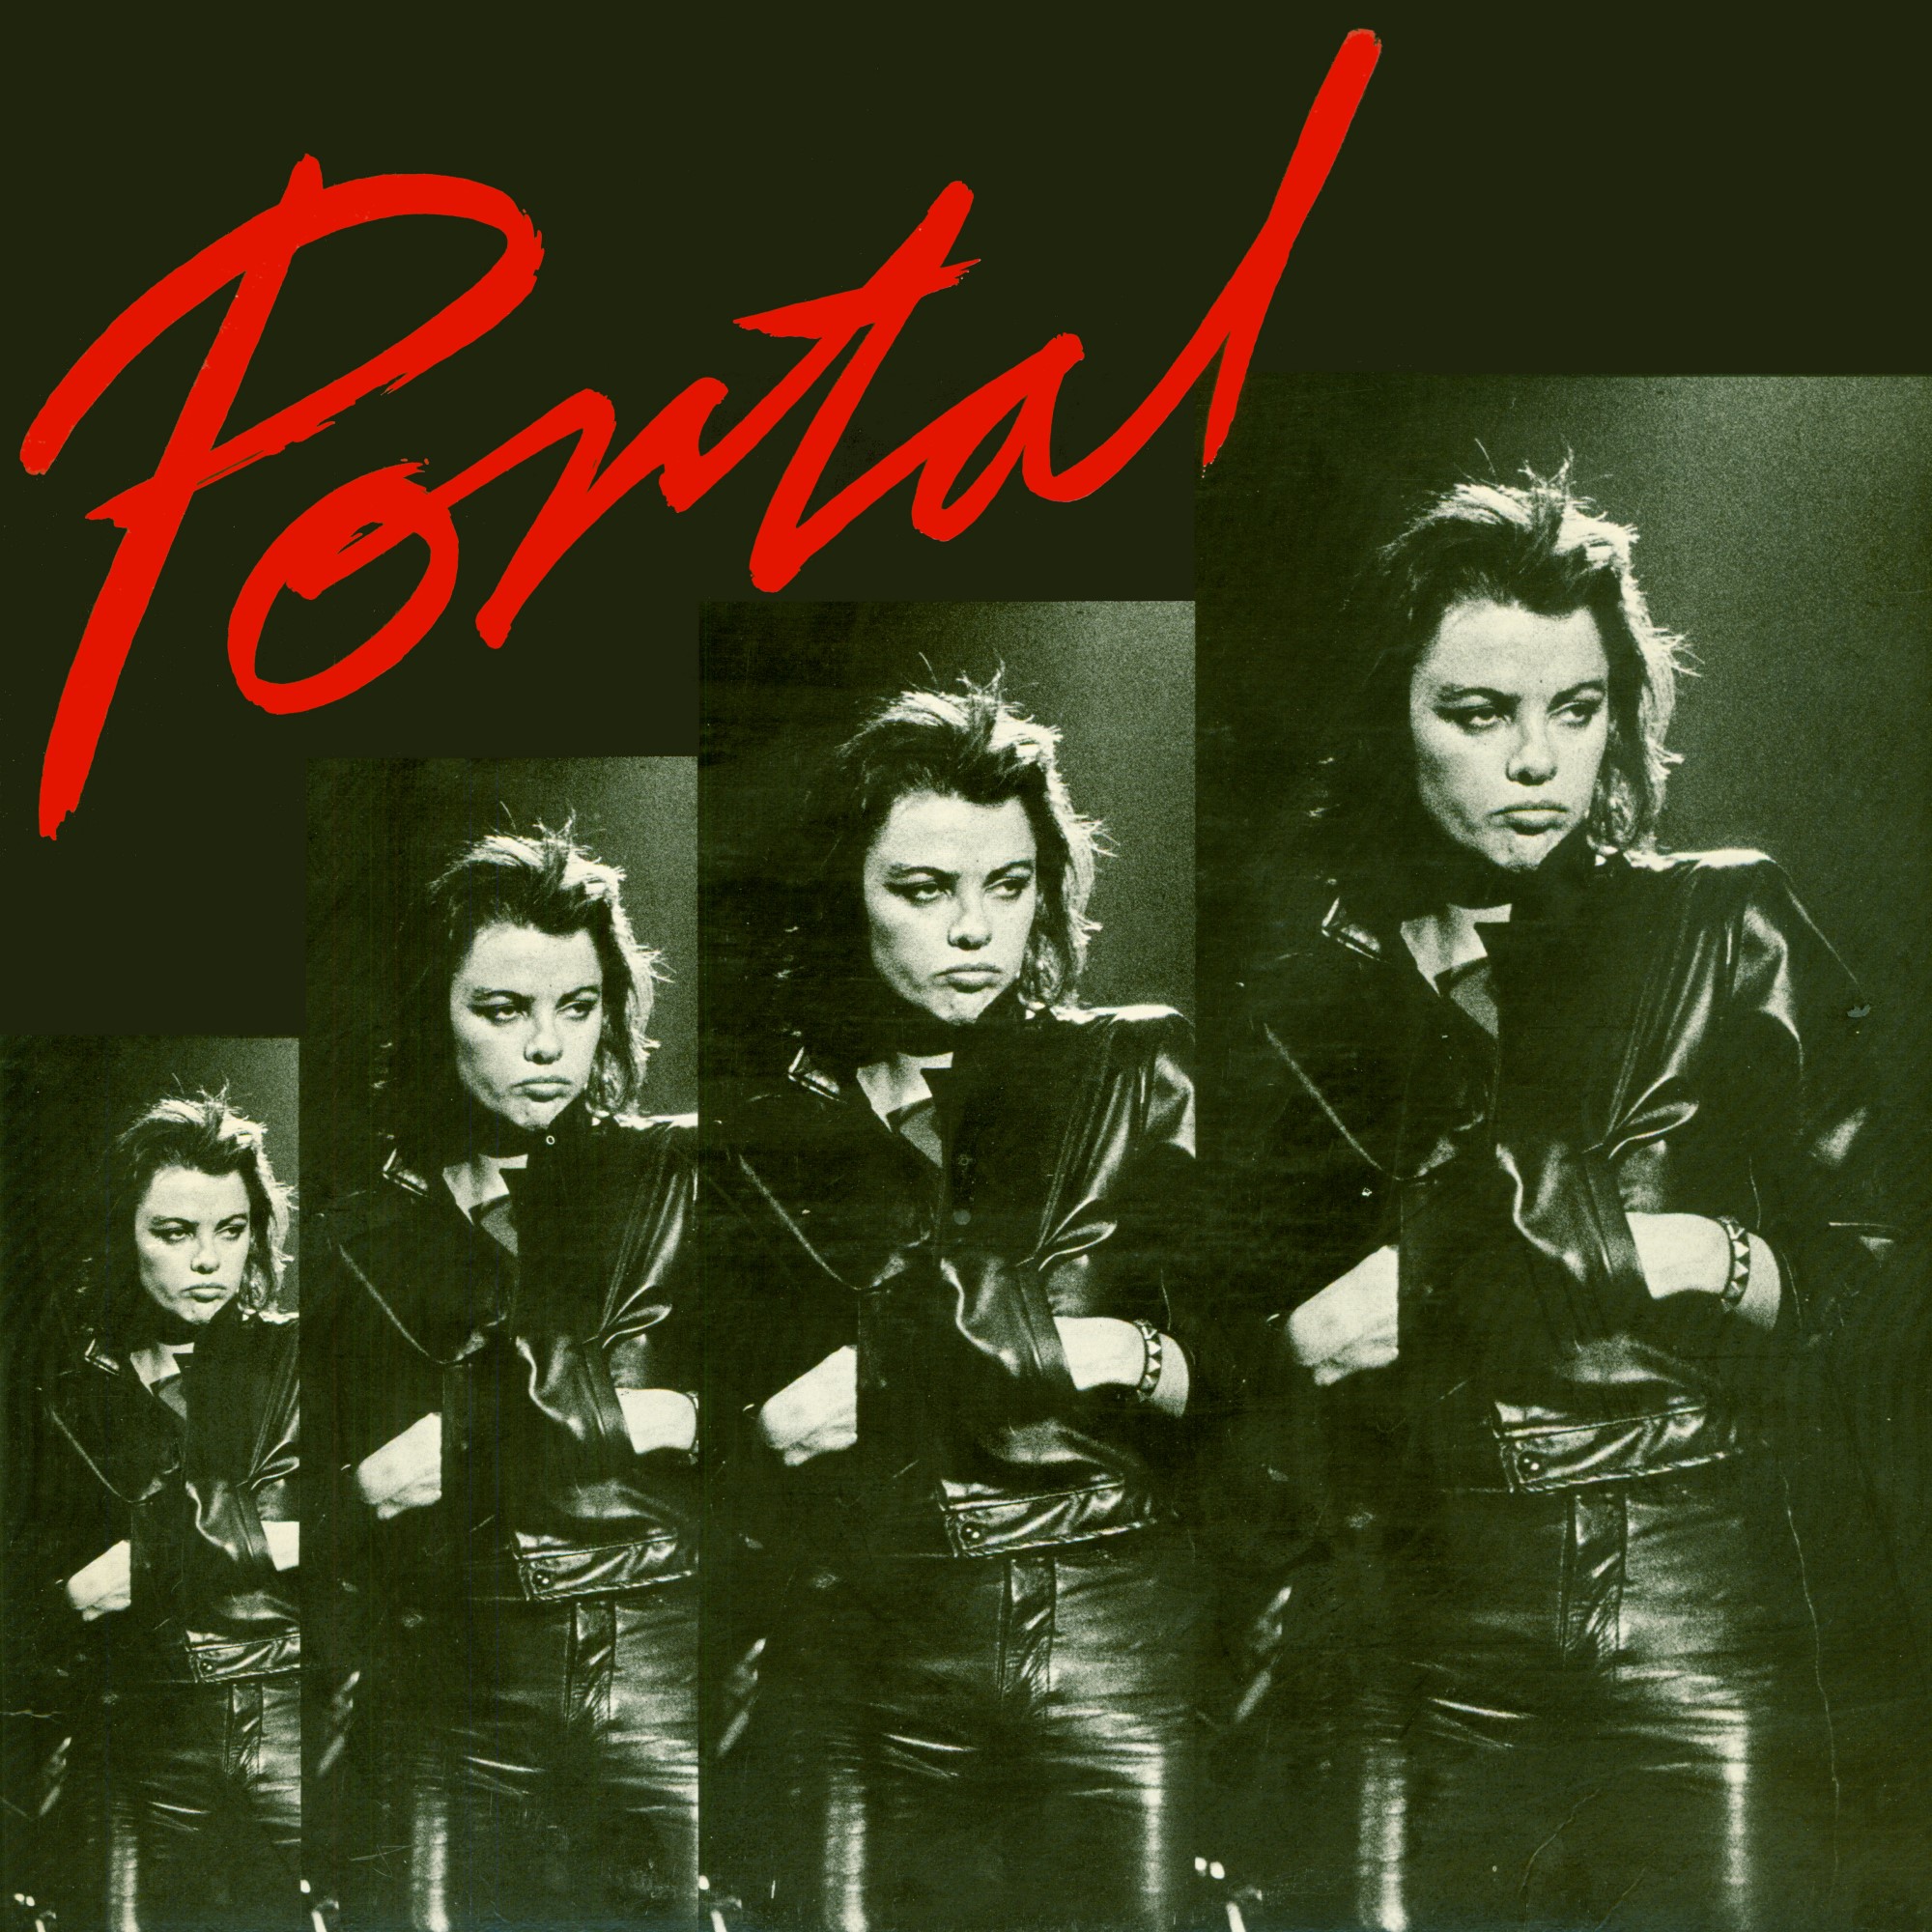 Portal (1981)